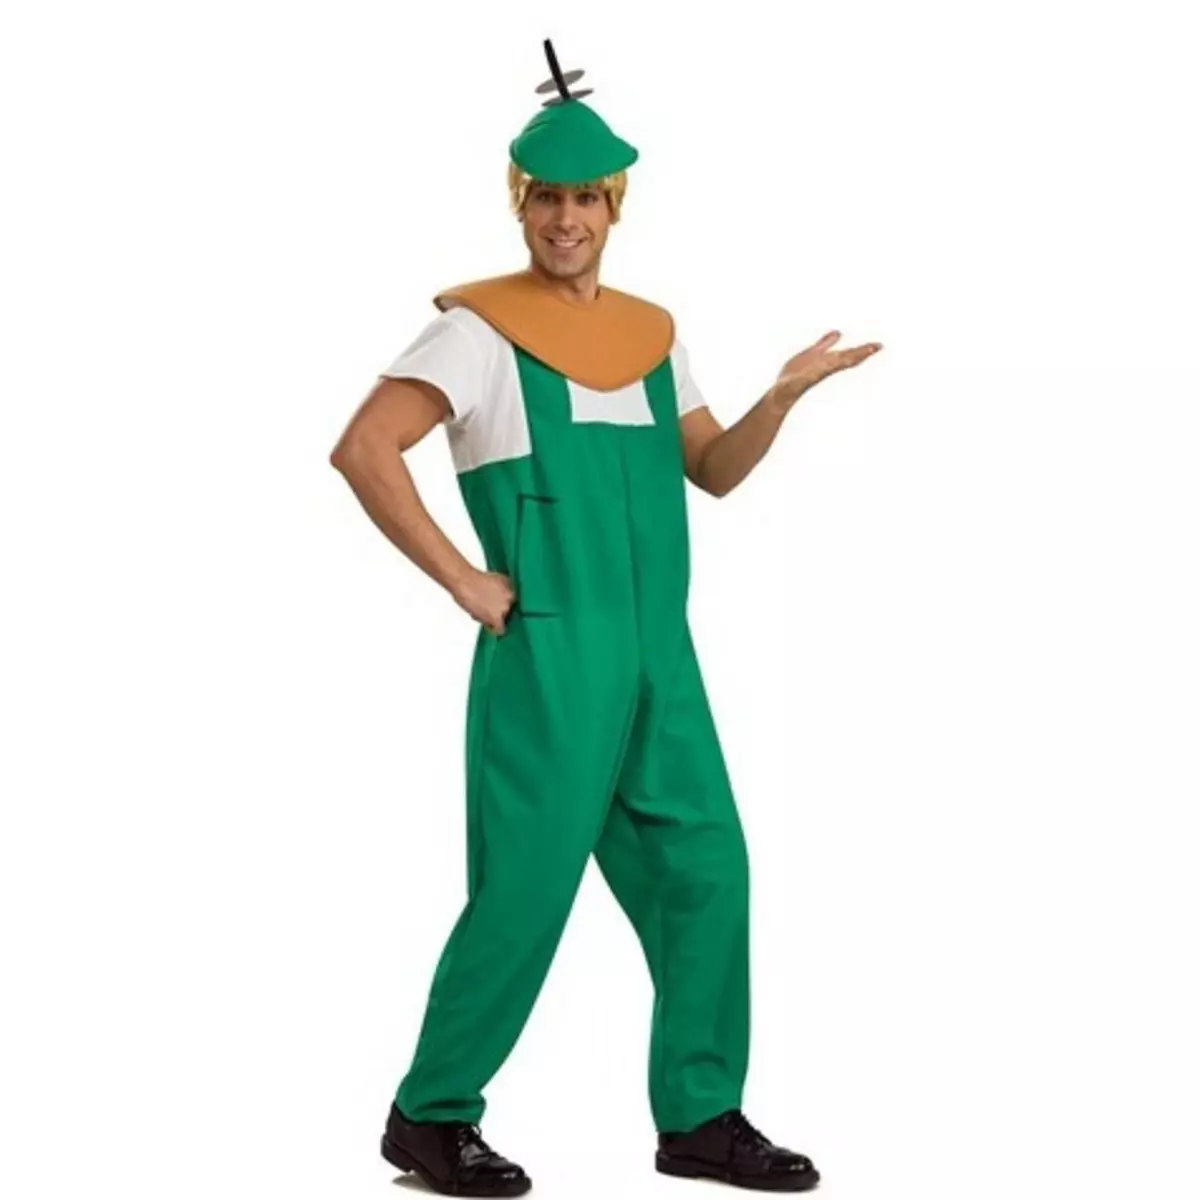  Costume d'Elroy Jetson - The Jetson - L